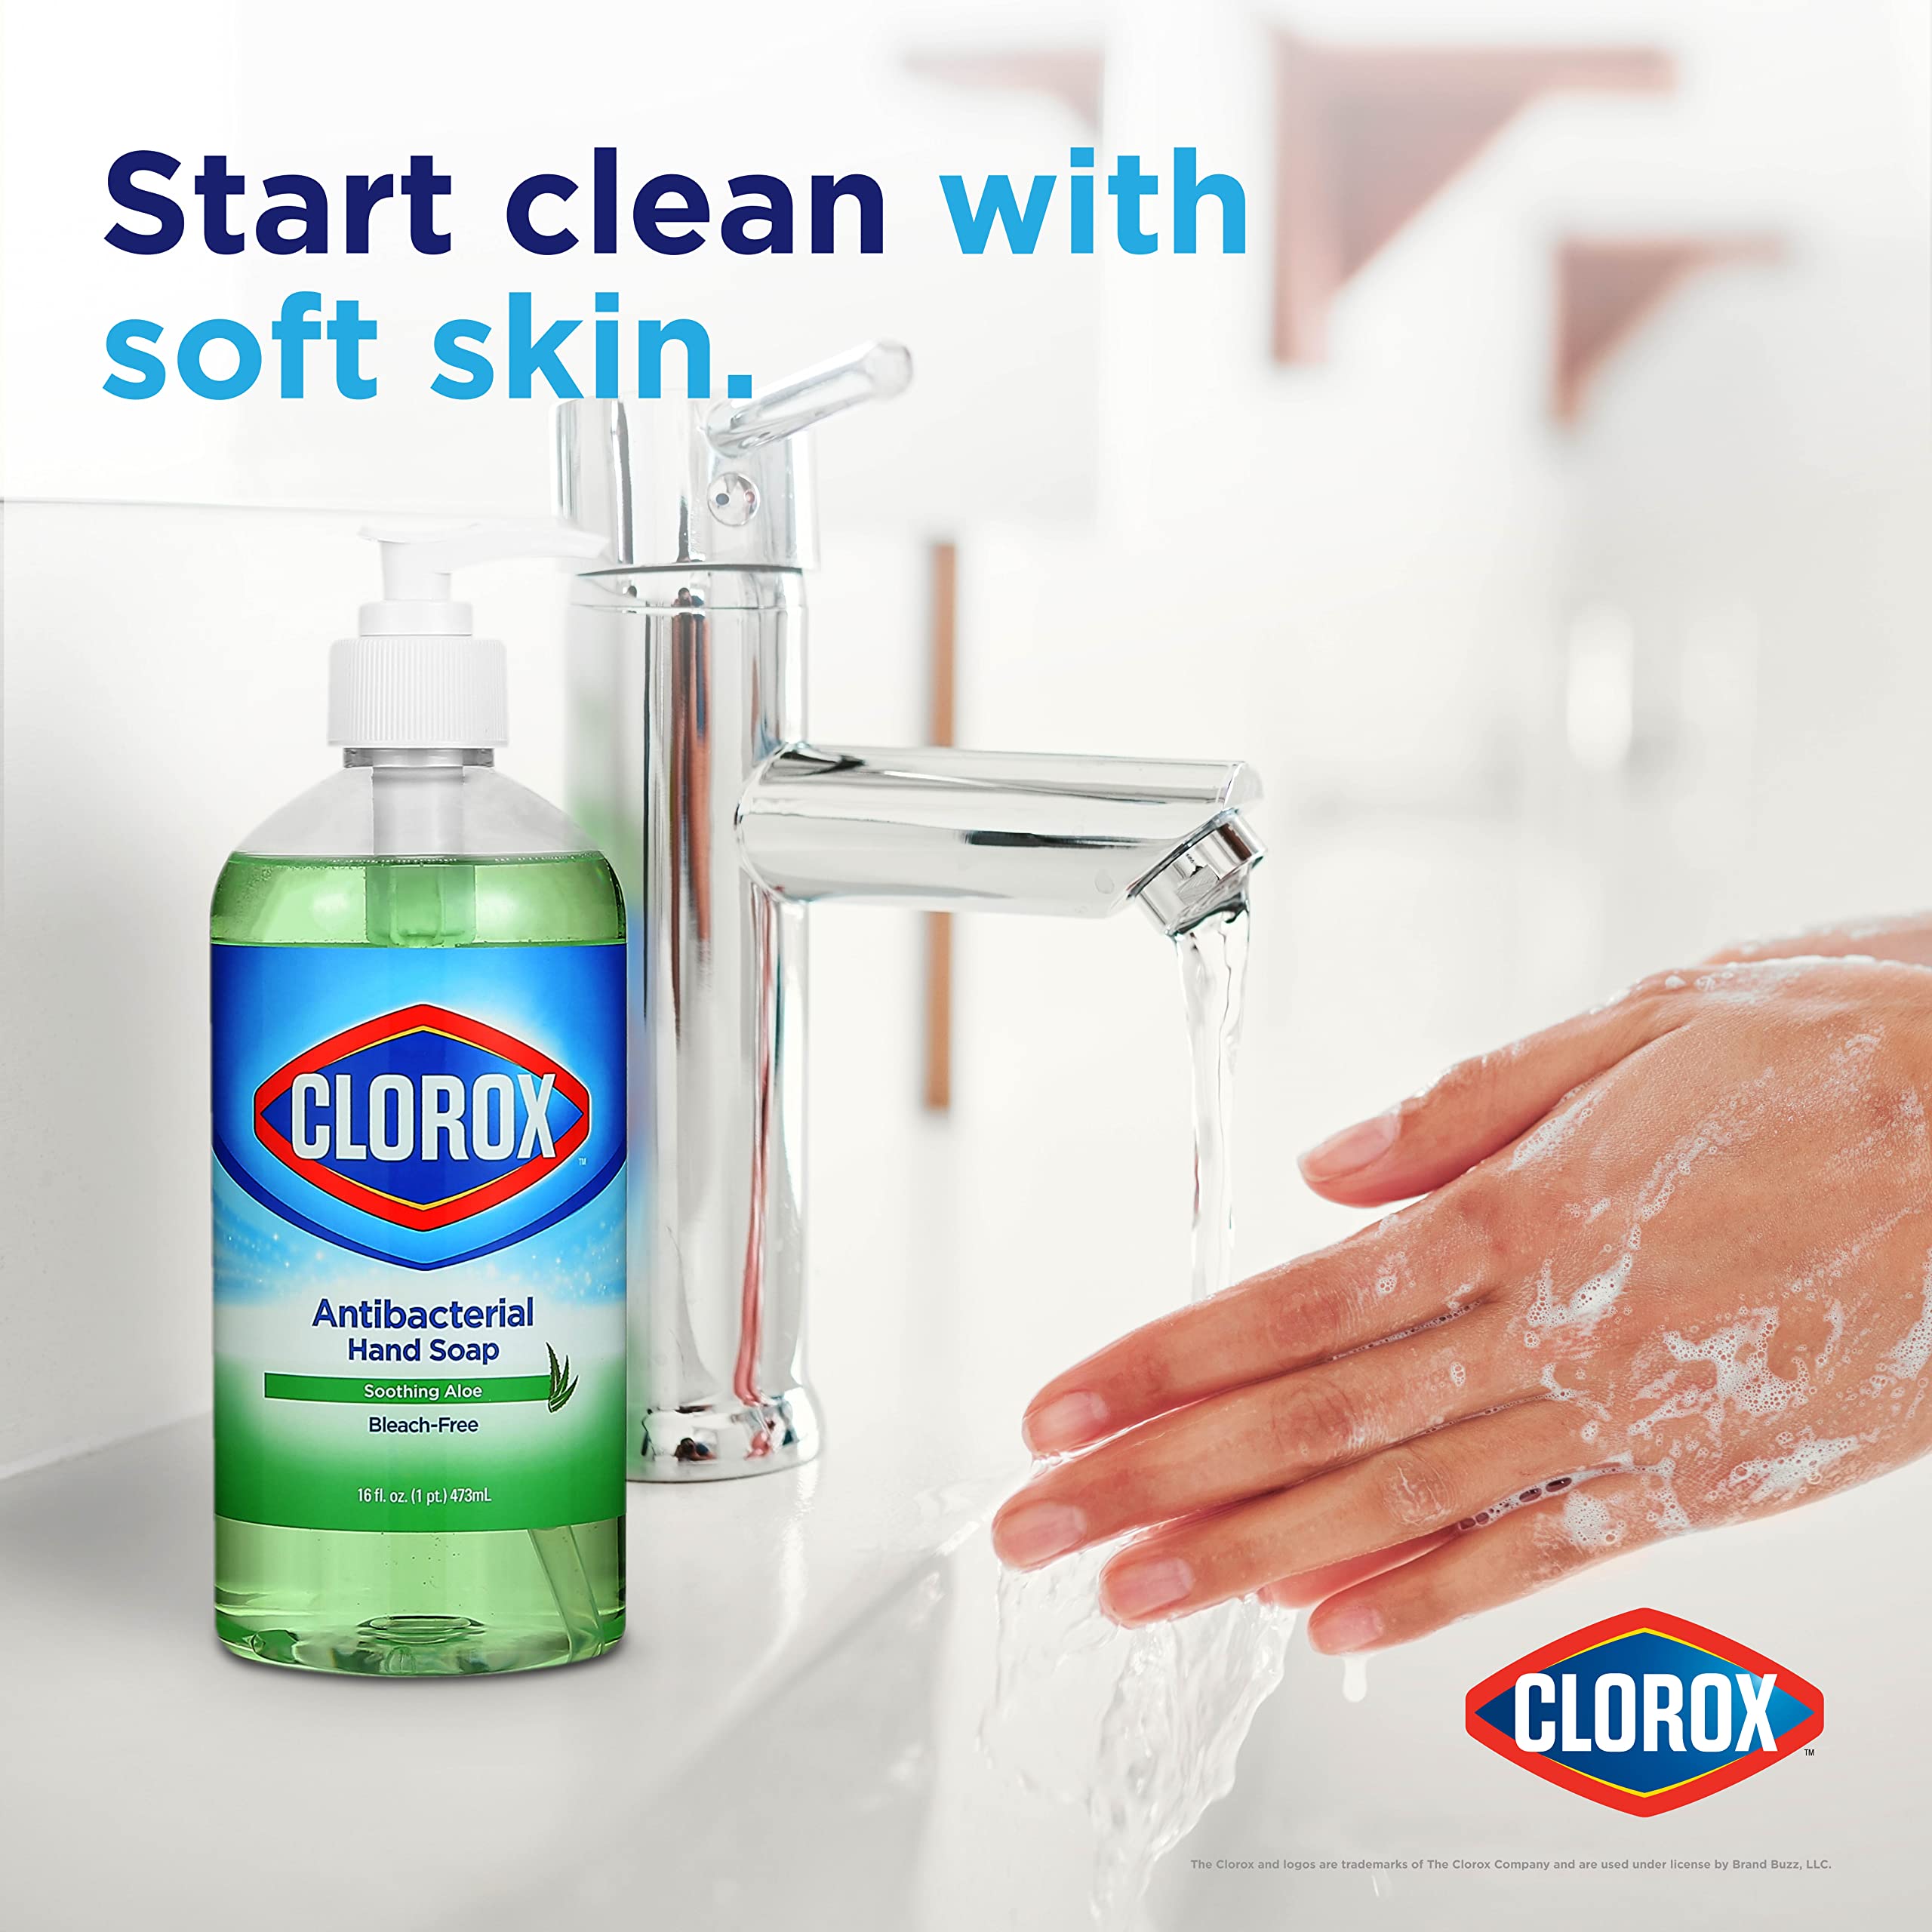 Clorox Liquid Hand Soap Pump - 16 oz Soothing Aloe Antibacterial Hand Soap - Liquid Hand Soap Eliminates Dirt, Soft on Hands Tough on Dirt - Clorox Hand Soap, Bathroom Hand Soap, Kitchen Soap